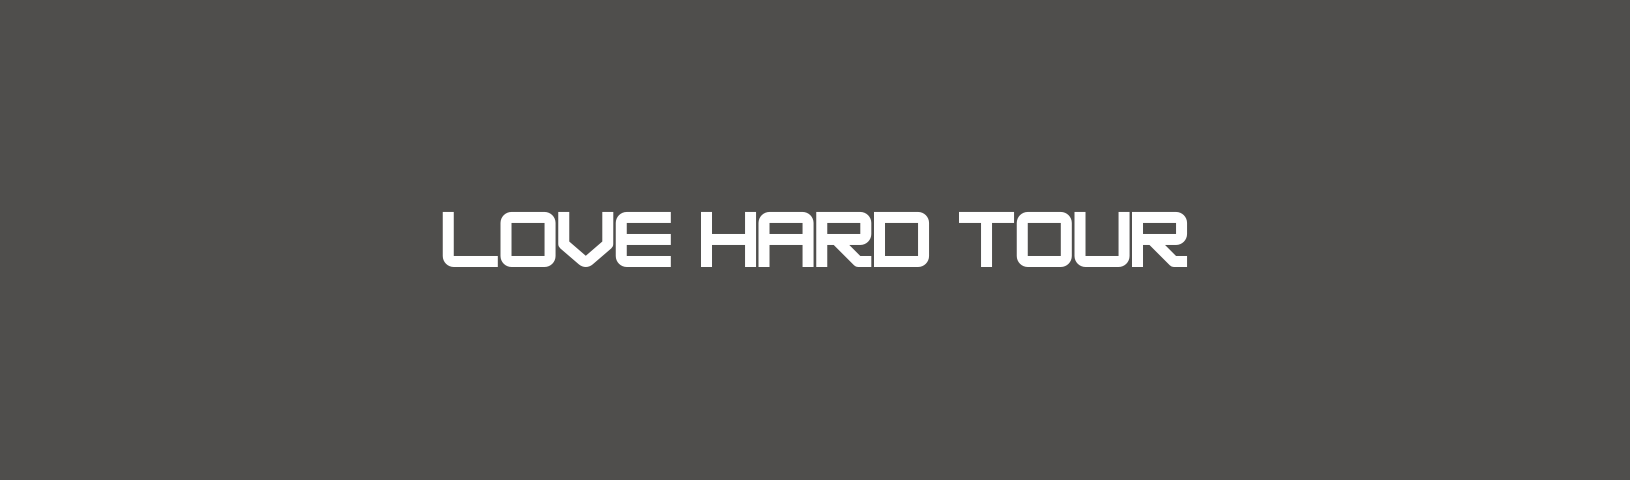 Love Hard Tour Background Image